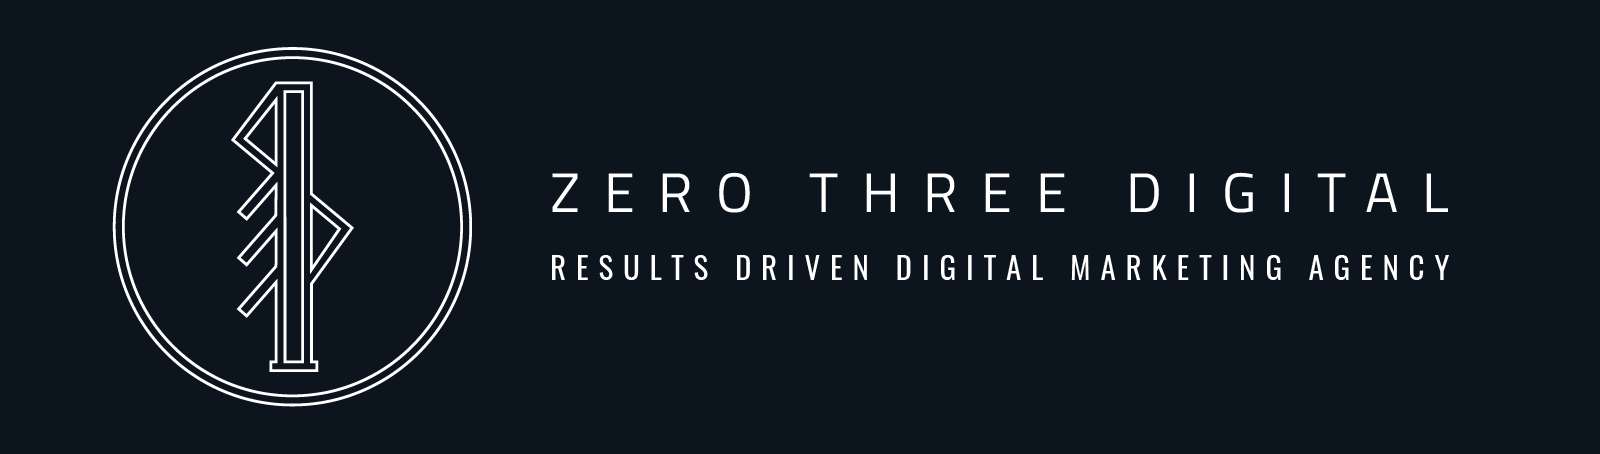 Zero-Three-Digital-Logo-Horizontal-Dark-Blue.png